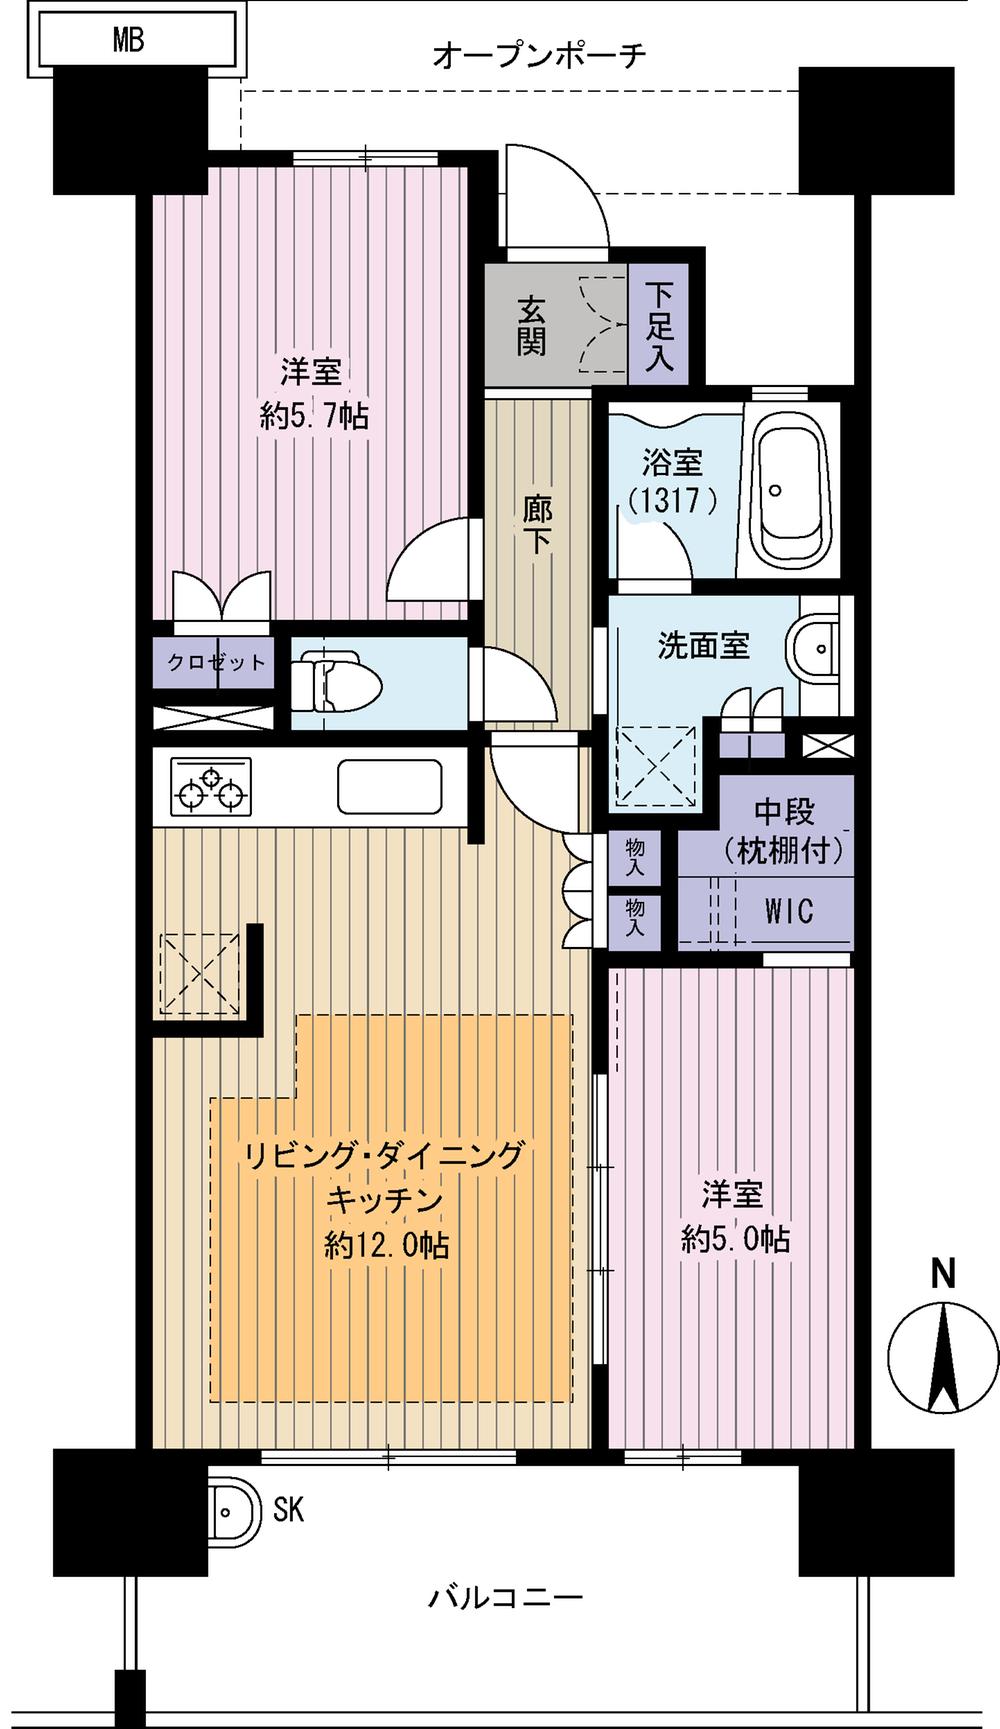 Floor plan. 2LDK, Price 27.6 million yen, Occupied area 53.26 sq m , Balcony area 11.4 sq m